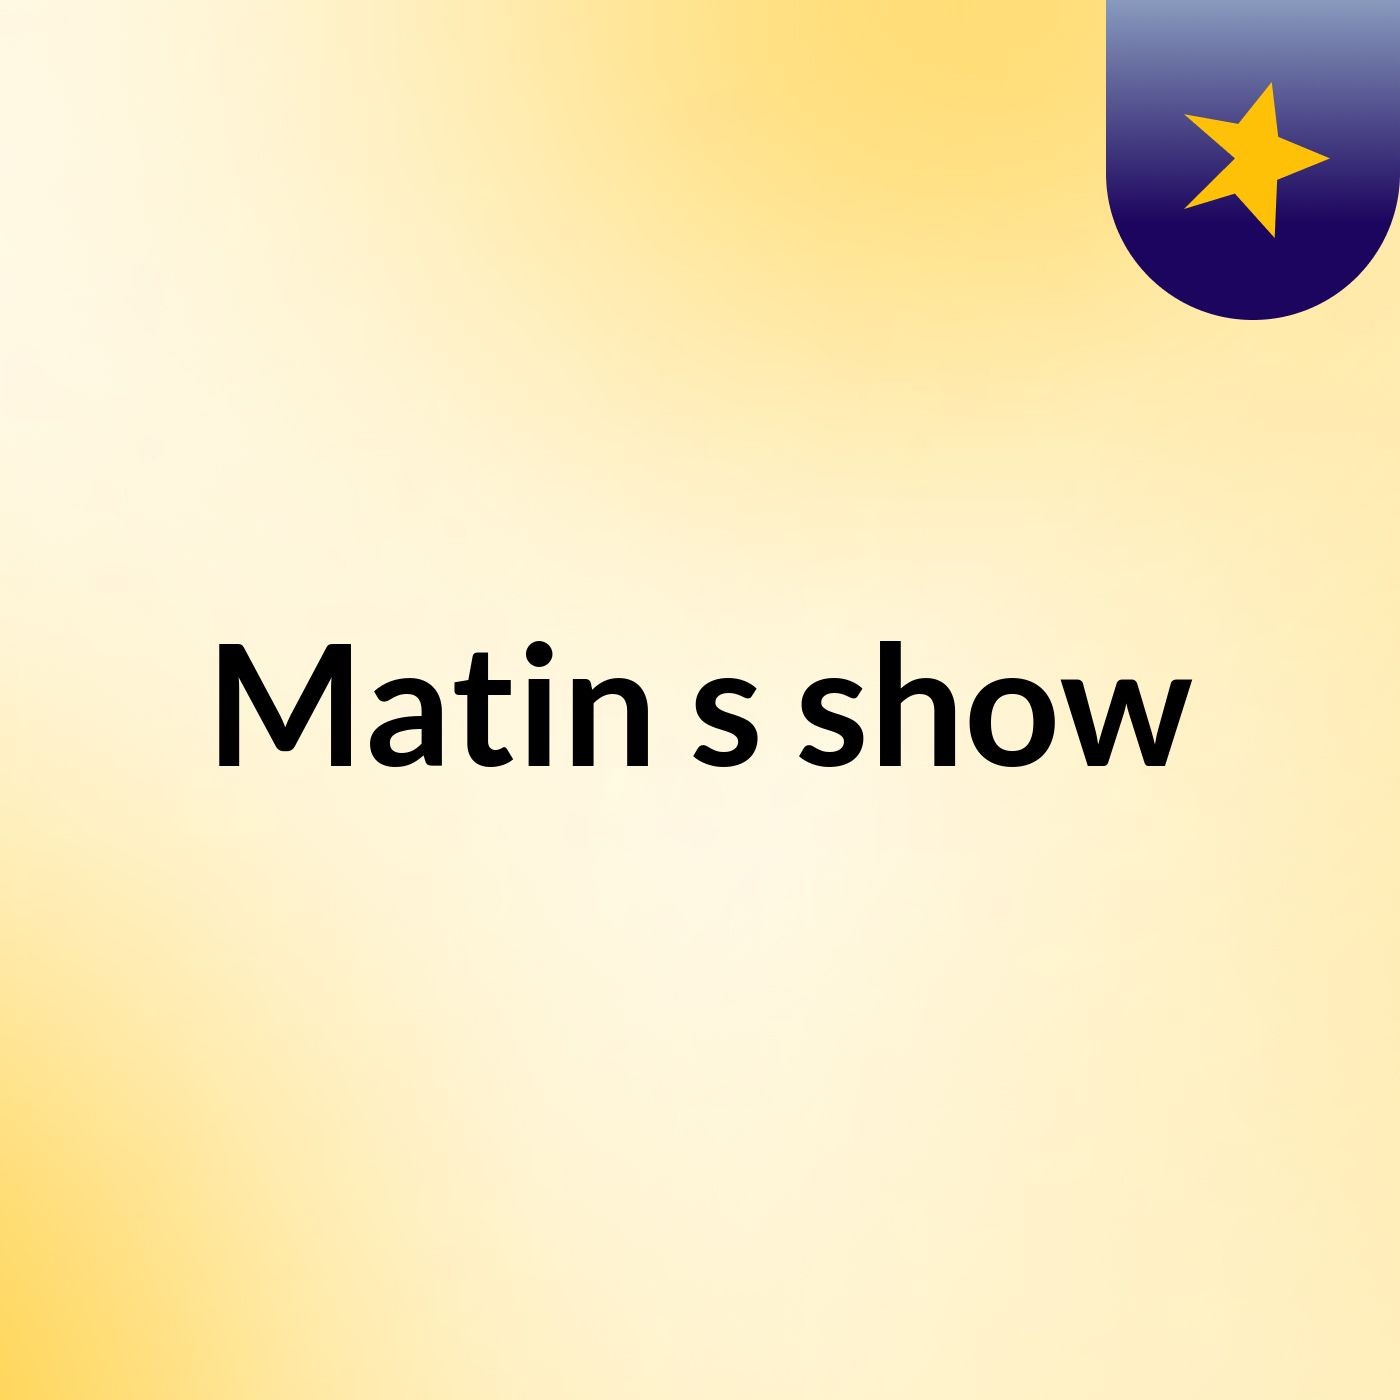 Matin's show